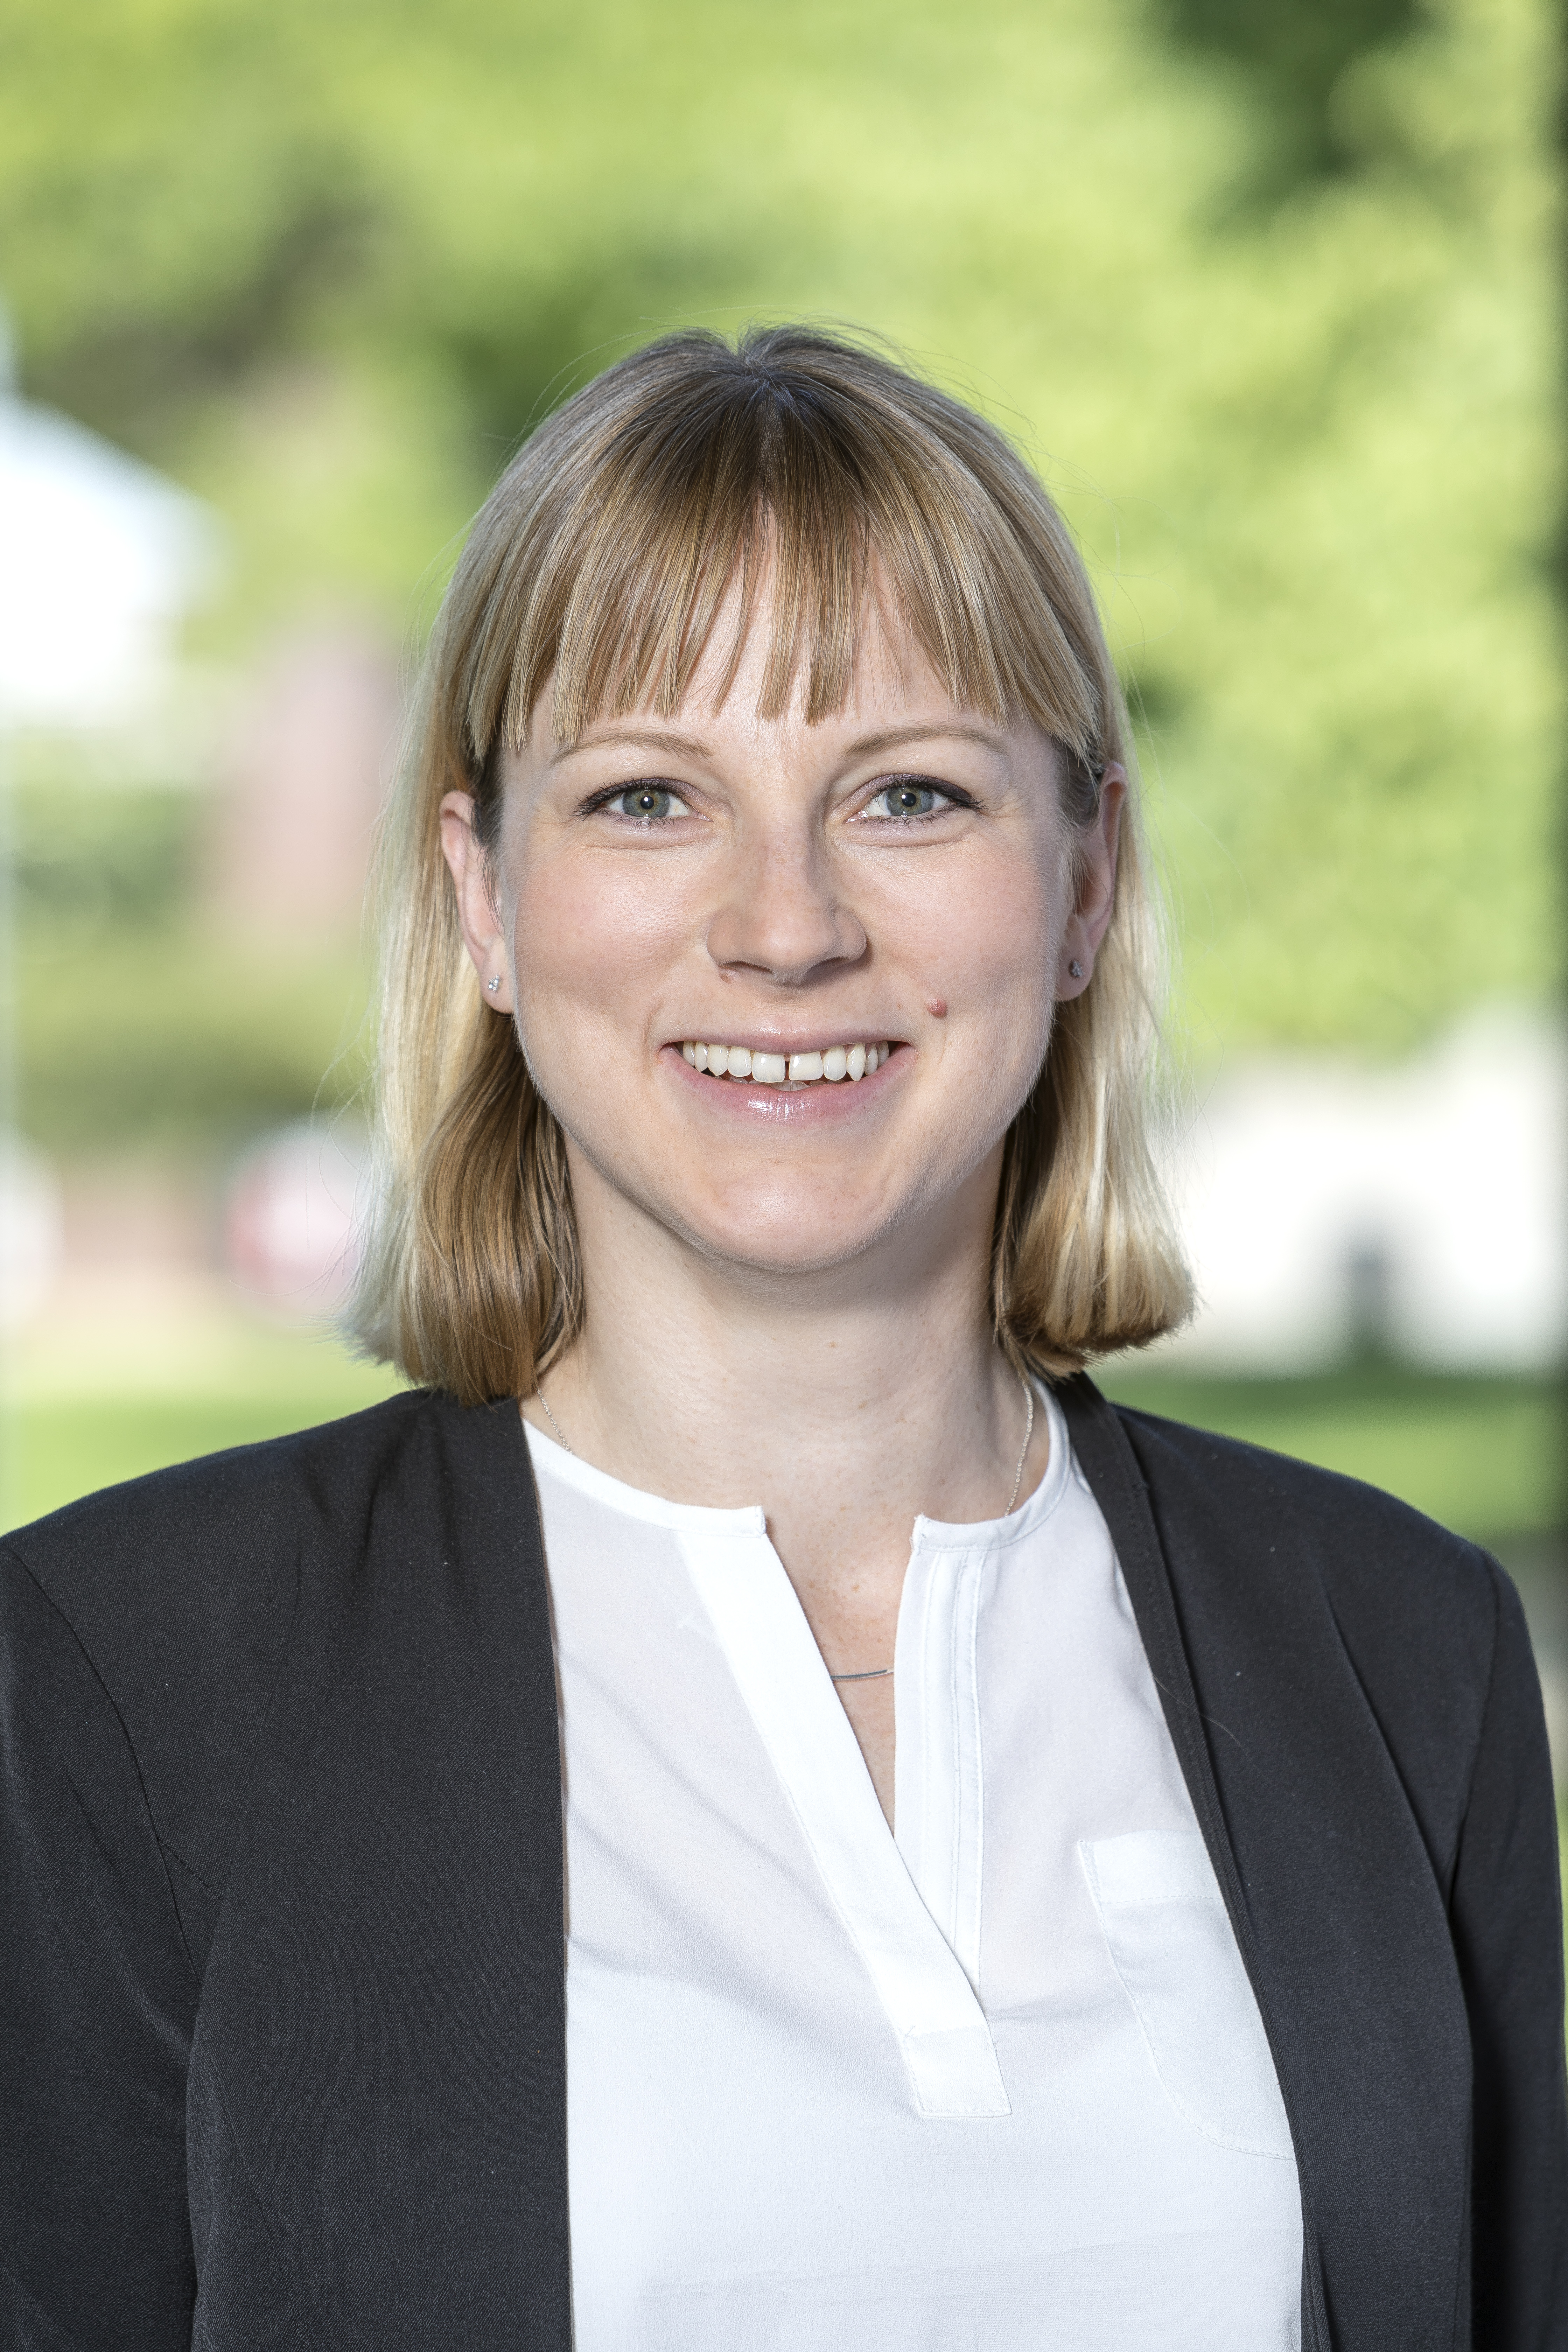 Dr. Nale Lehmann-Willenbrock